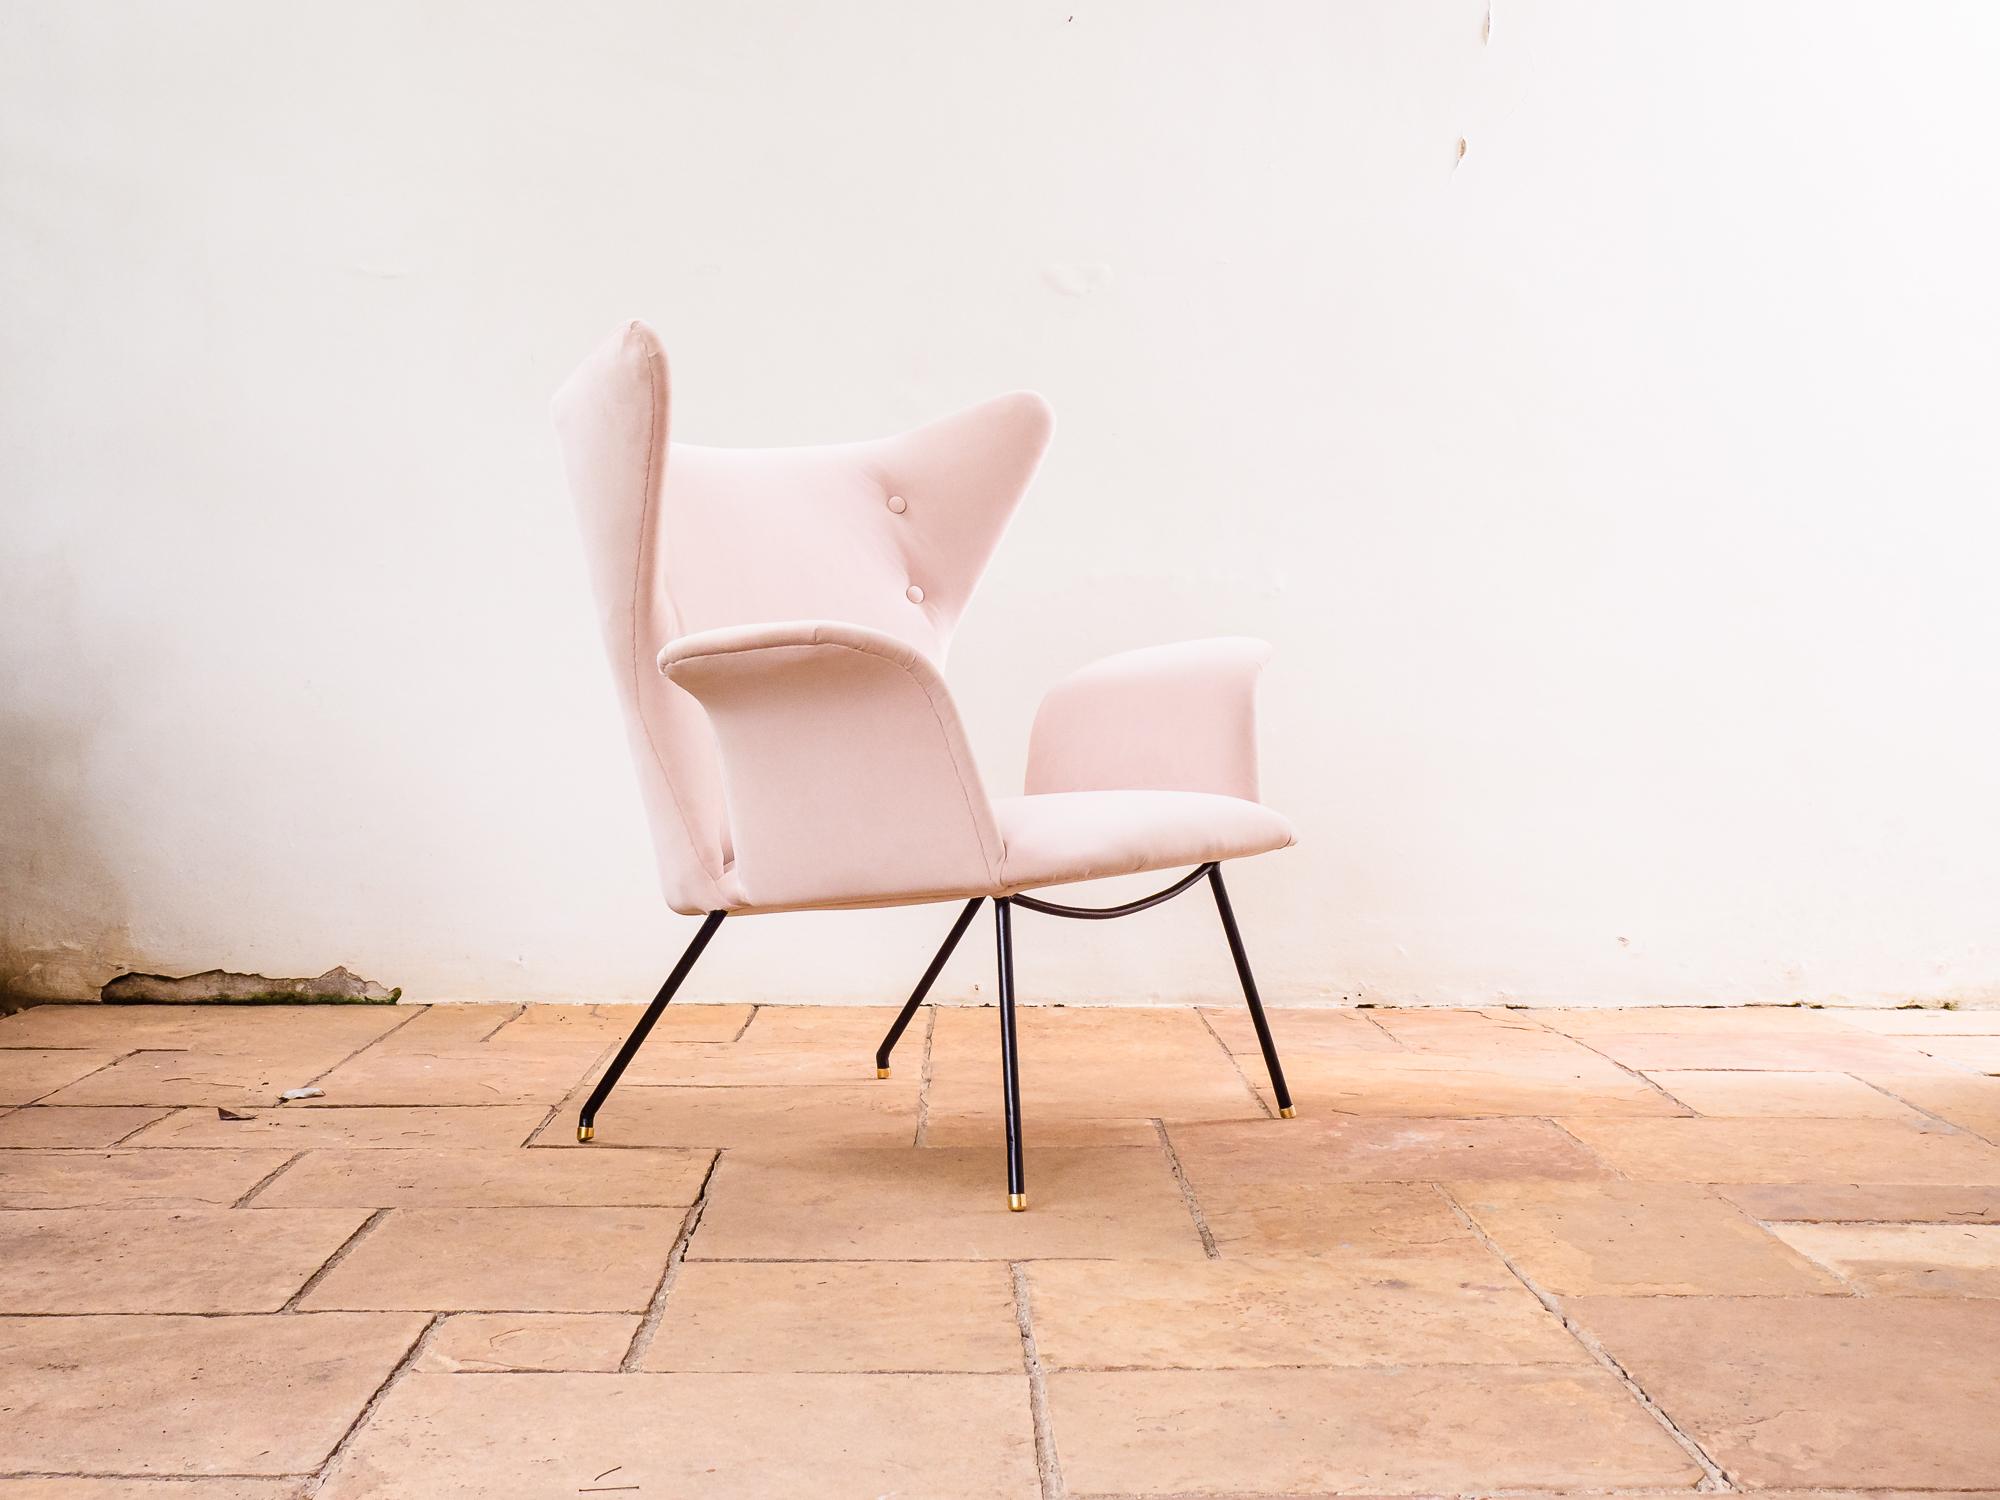 Carlo Hauner Wingback Wrought Iron Lounge Chair, Brazilian Modern, Early 1950s For Sale 1